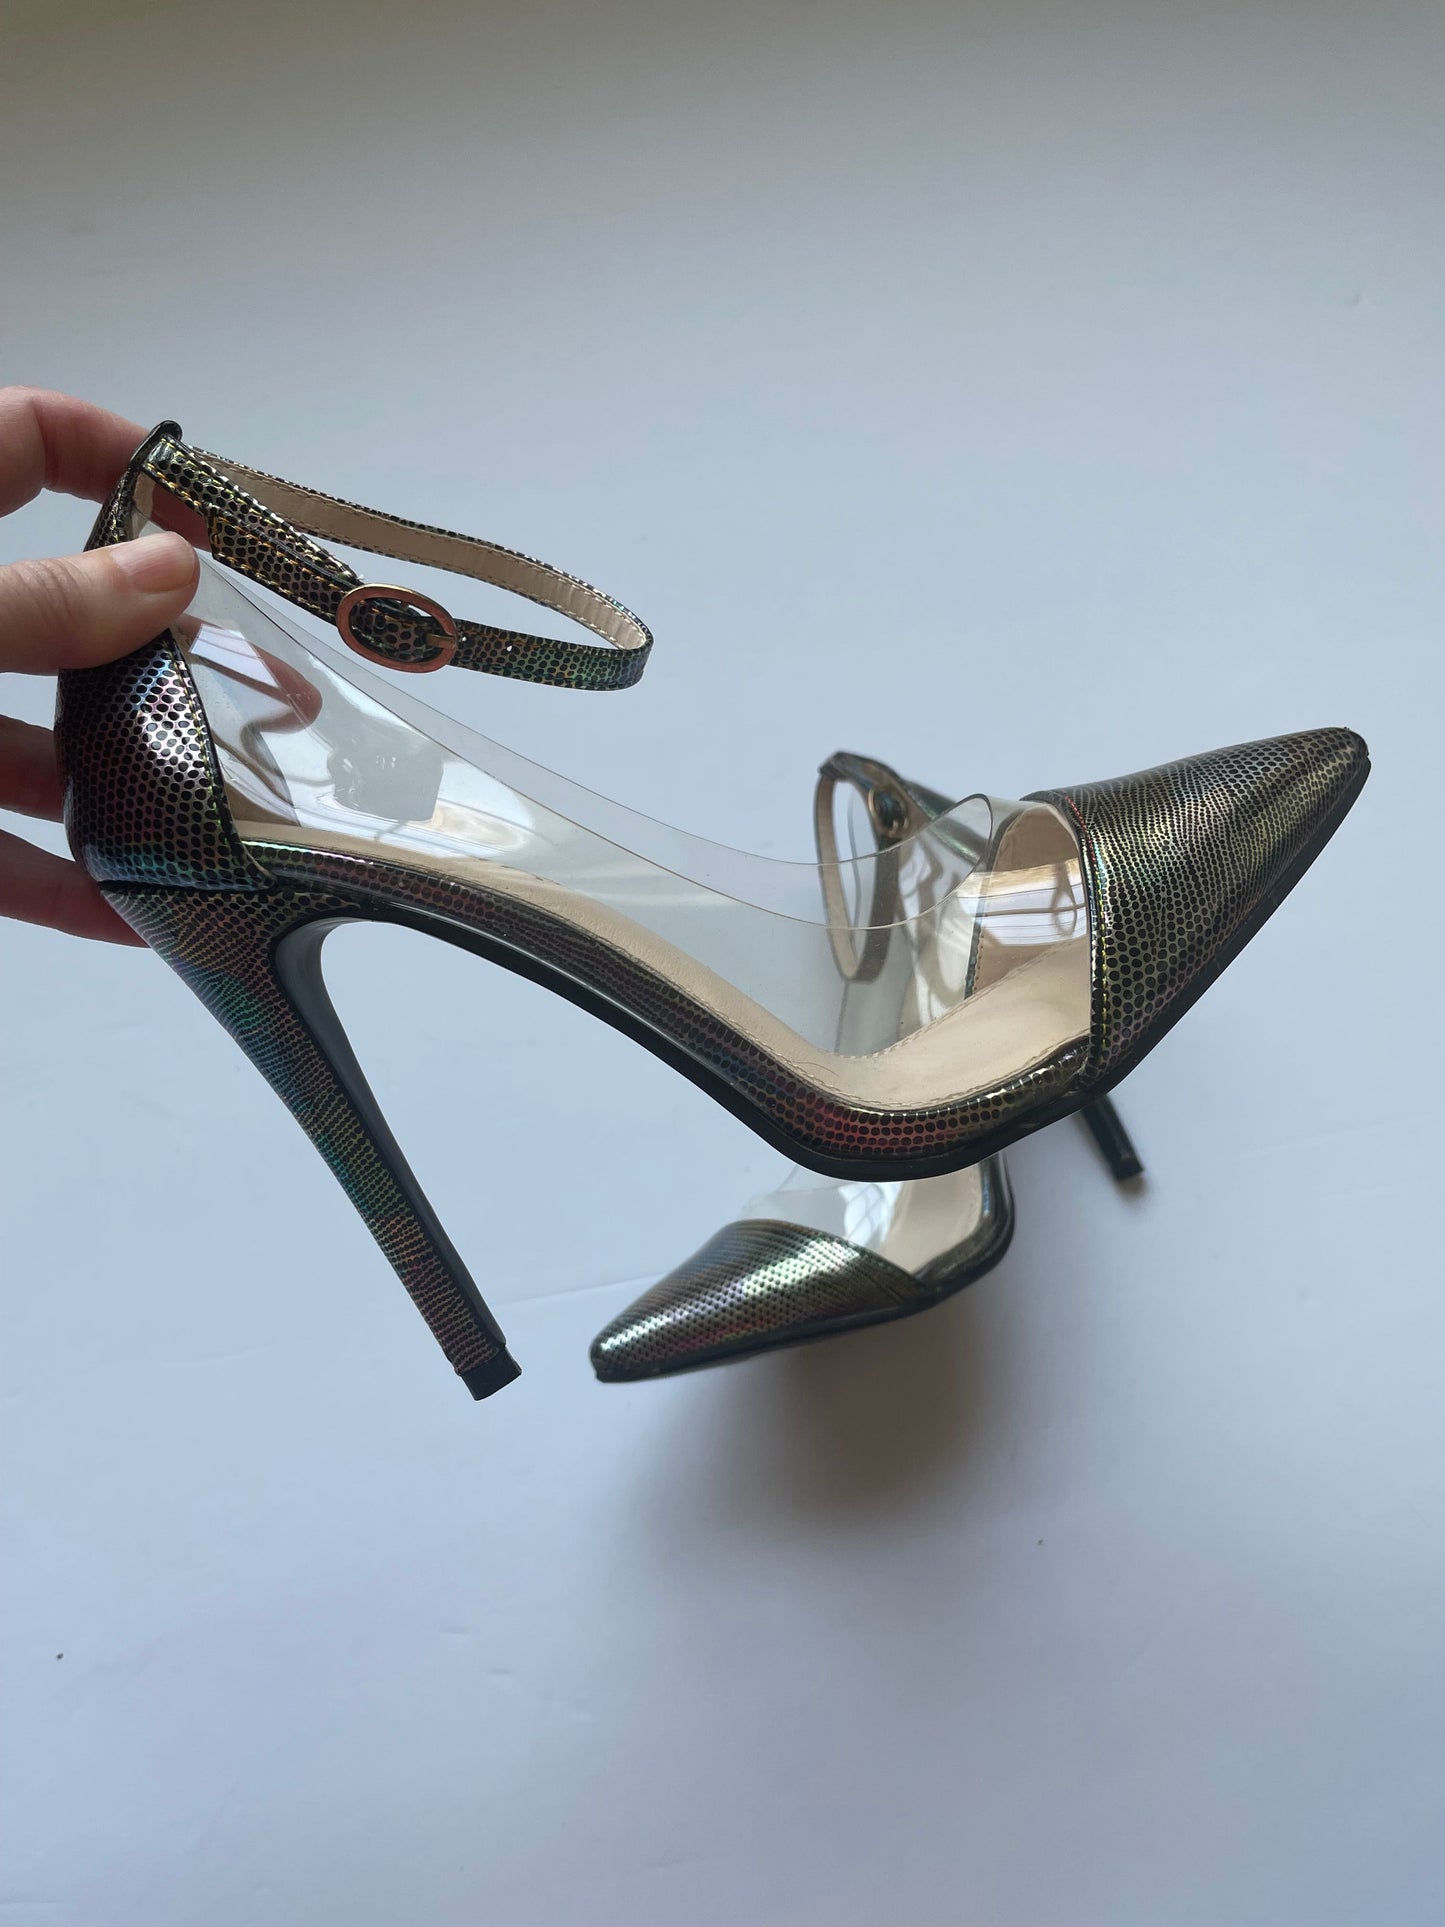 Shoes Heels Stiletto By Liliana  Size: 7